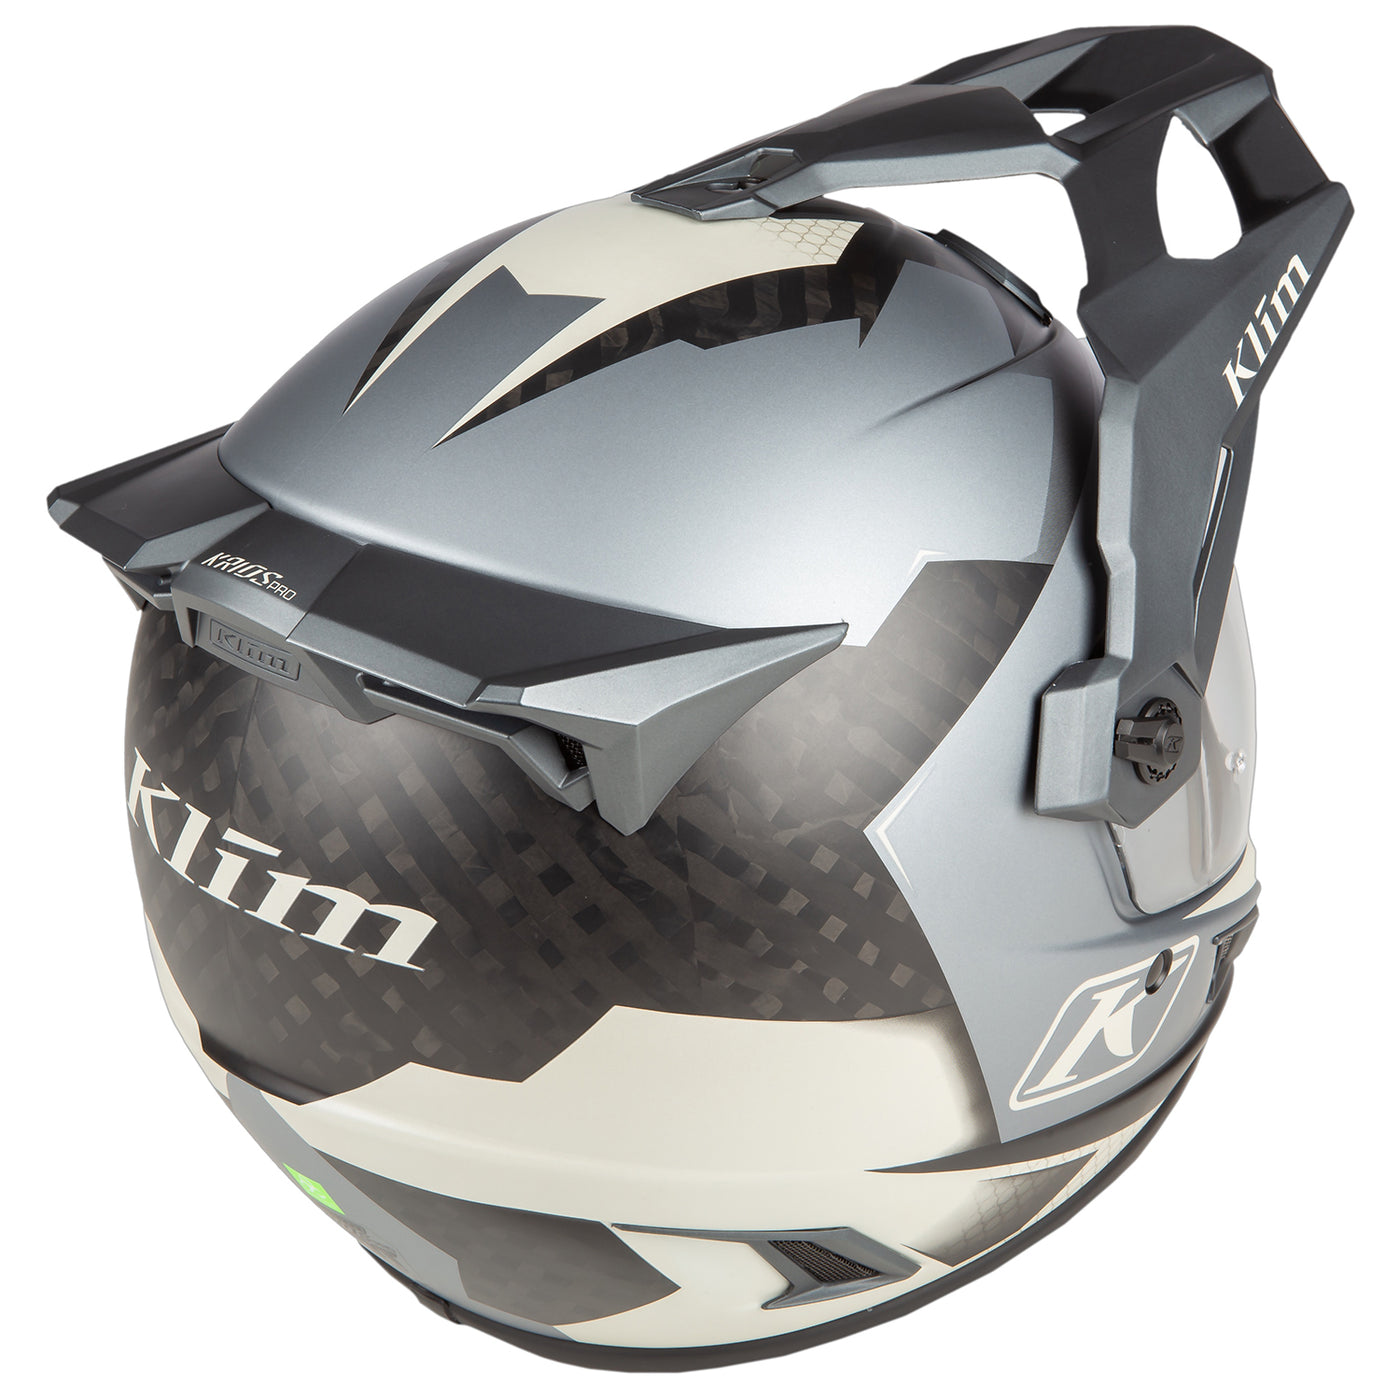 Klim Krios Pro ECE/DOT Charger Gray Helmet